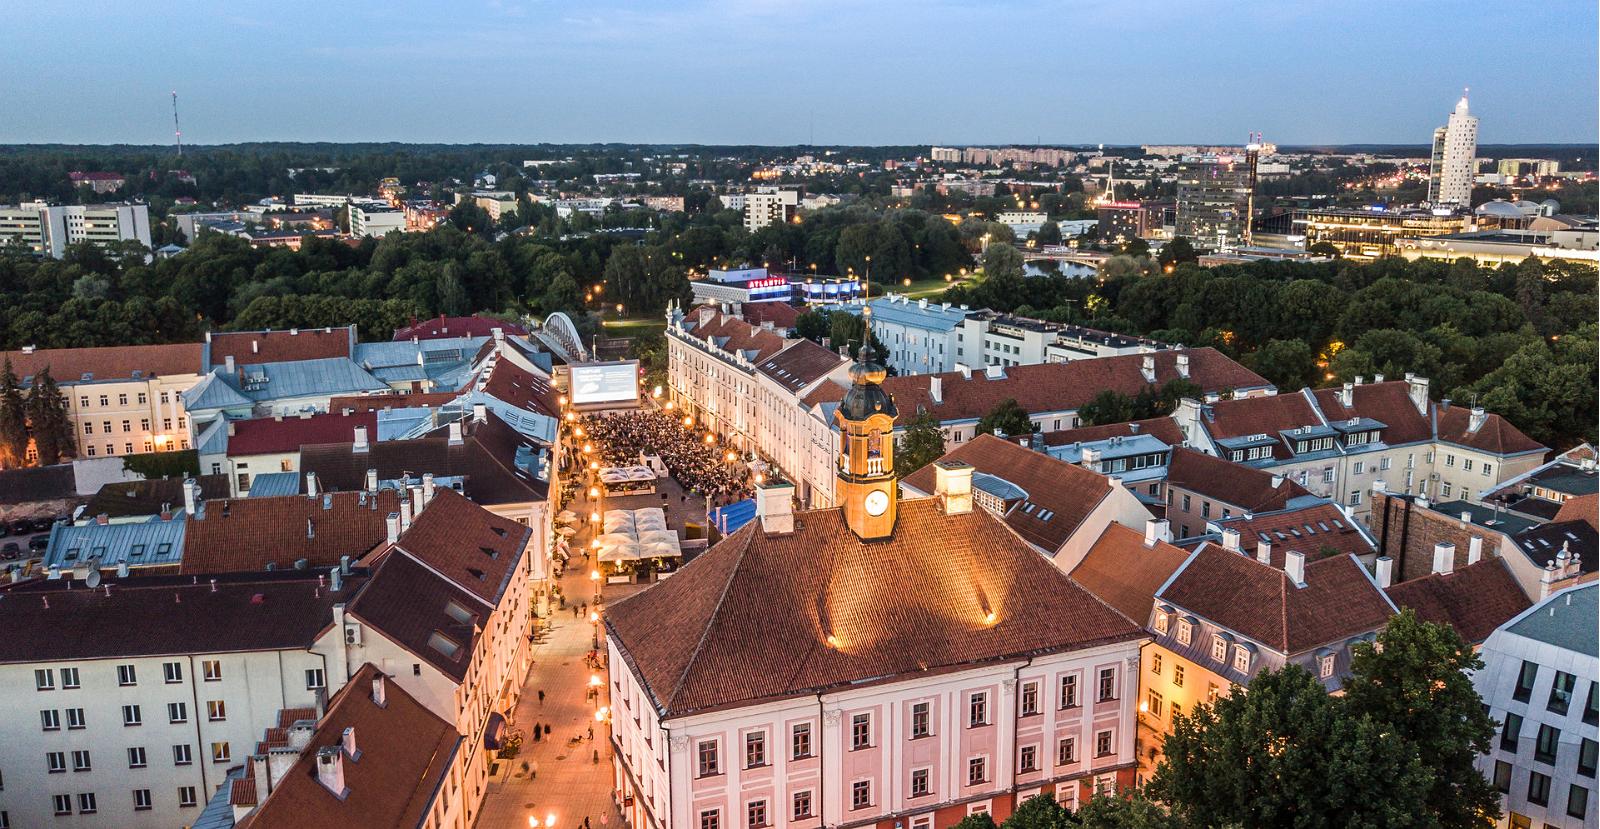 Virtual tour of the city of Tartu: Tartu hosts many events